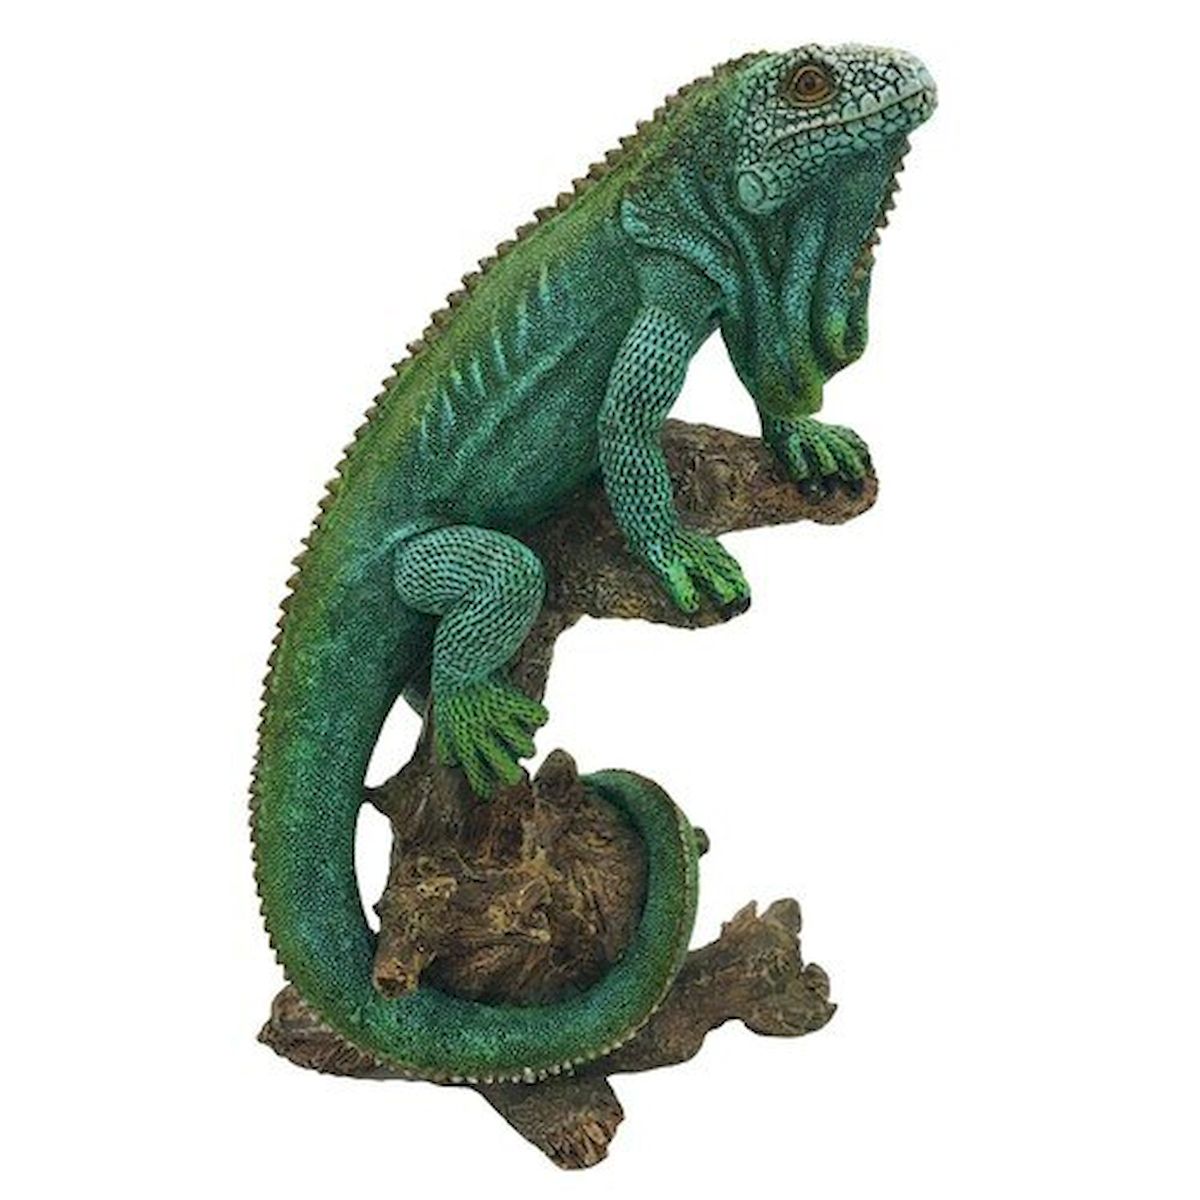 Picture of Mr. MJs HO-JY58025-8A Green Lizard on A Log Figurine